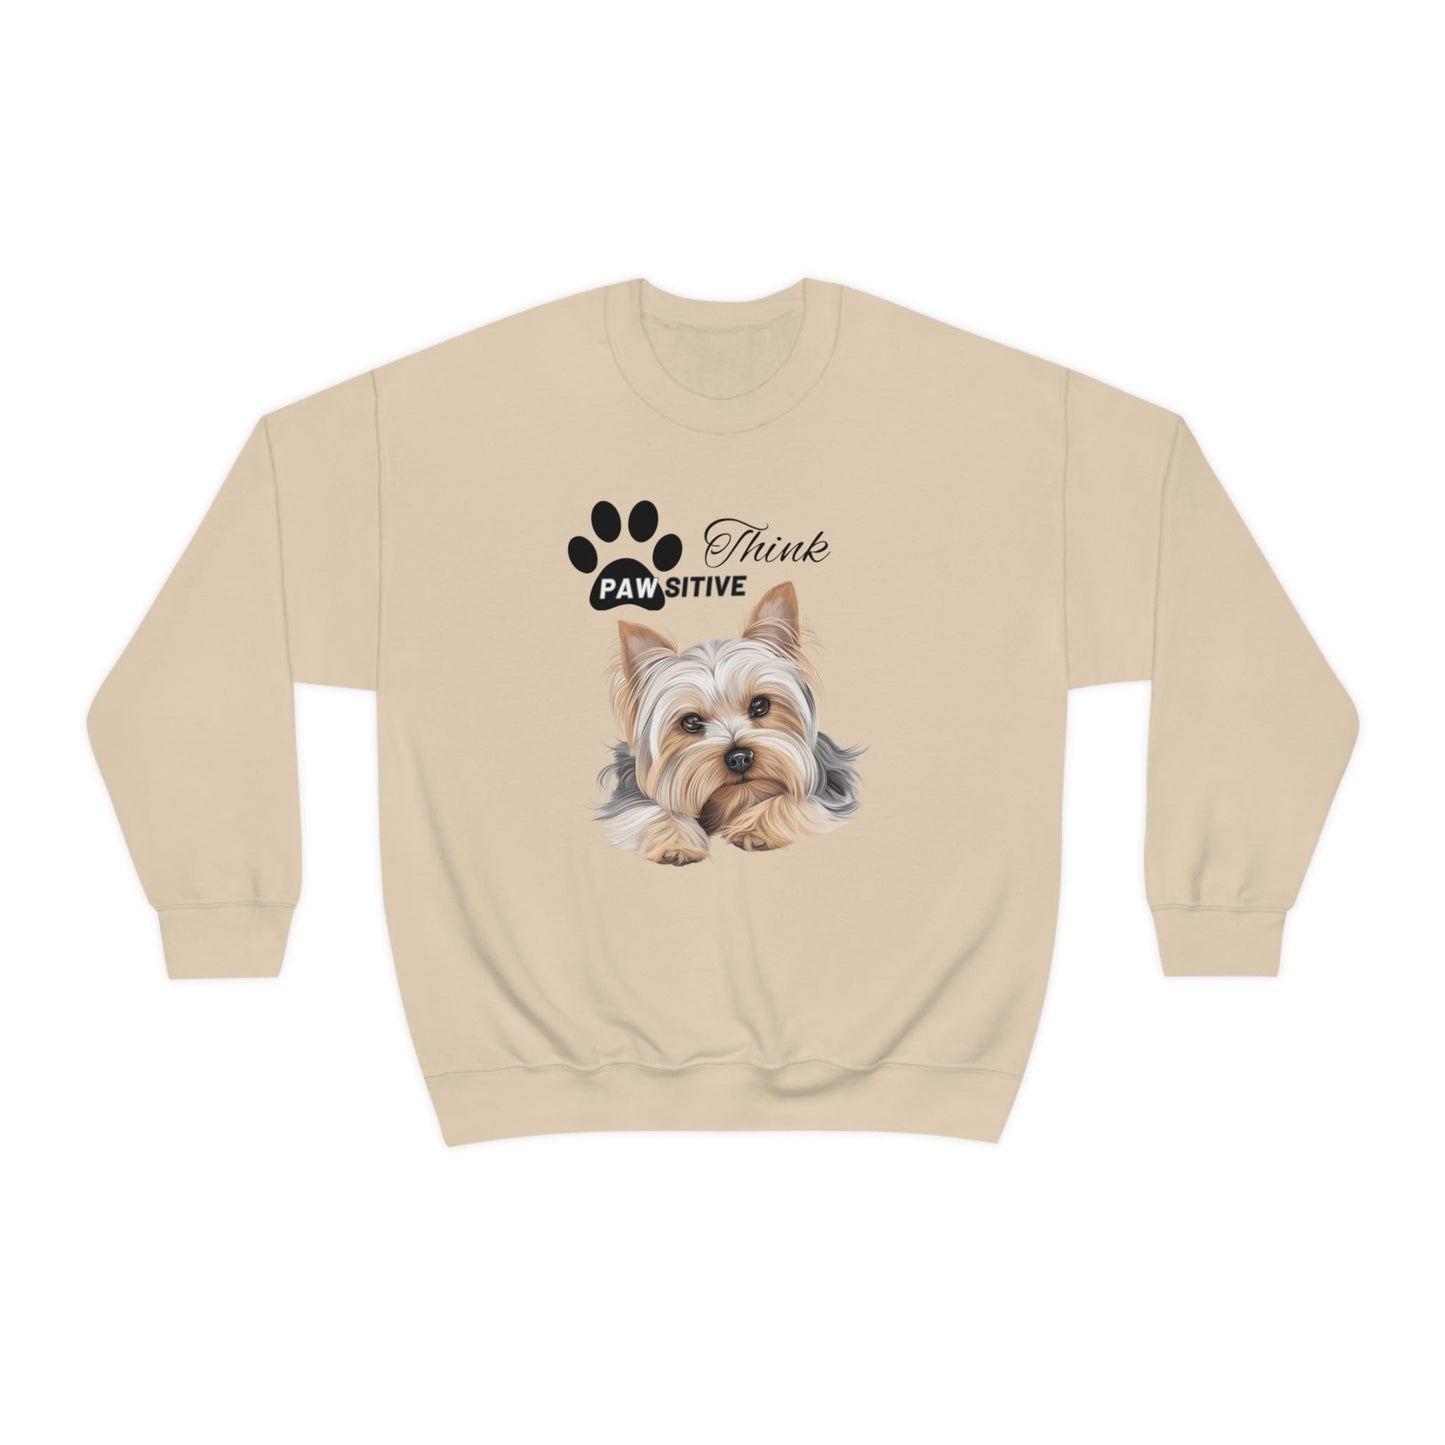 Cute Yorki Dog Mom Sweatshirt, Gift For Yorkie Lovers, Unique Yorkie Mom Gift, Yorkshire Terrier Dog Owner sweatshirt, Yorkie Birthday Gifts